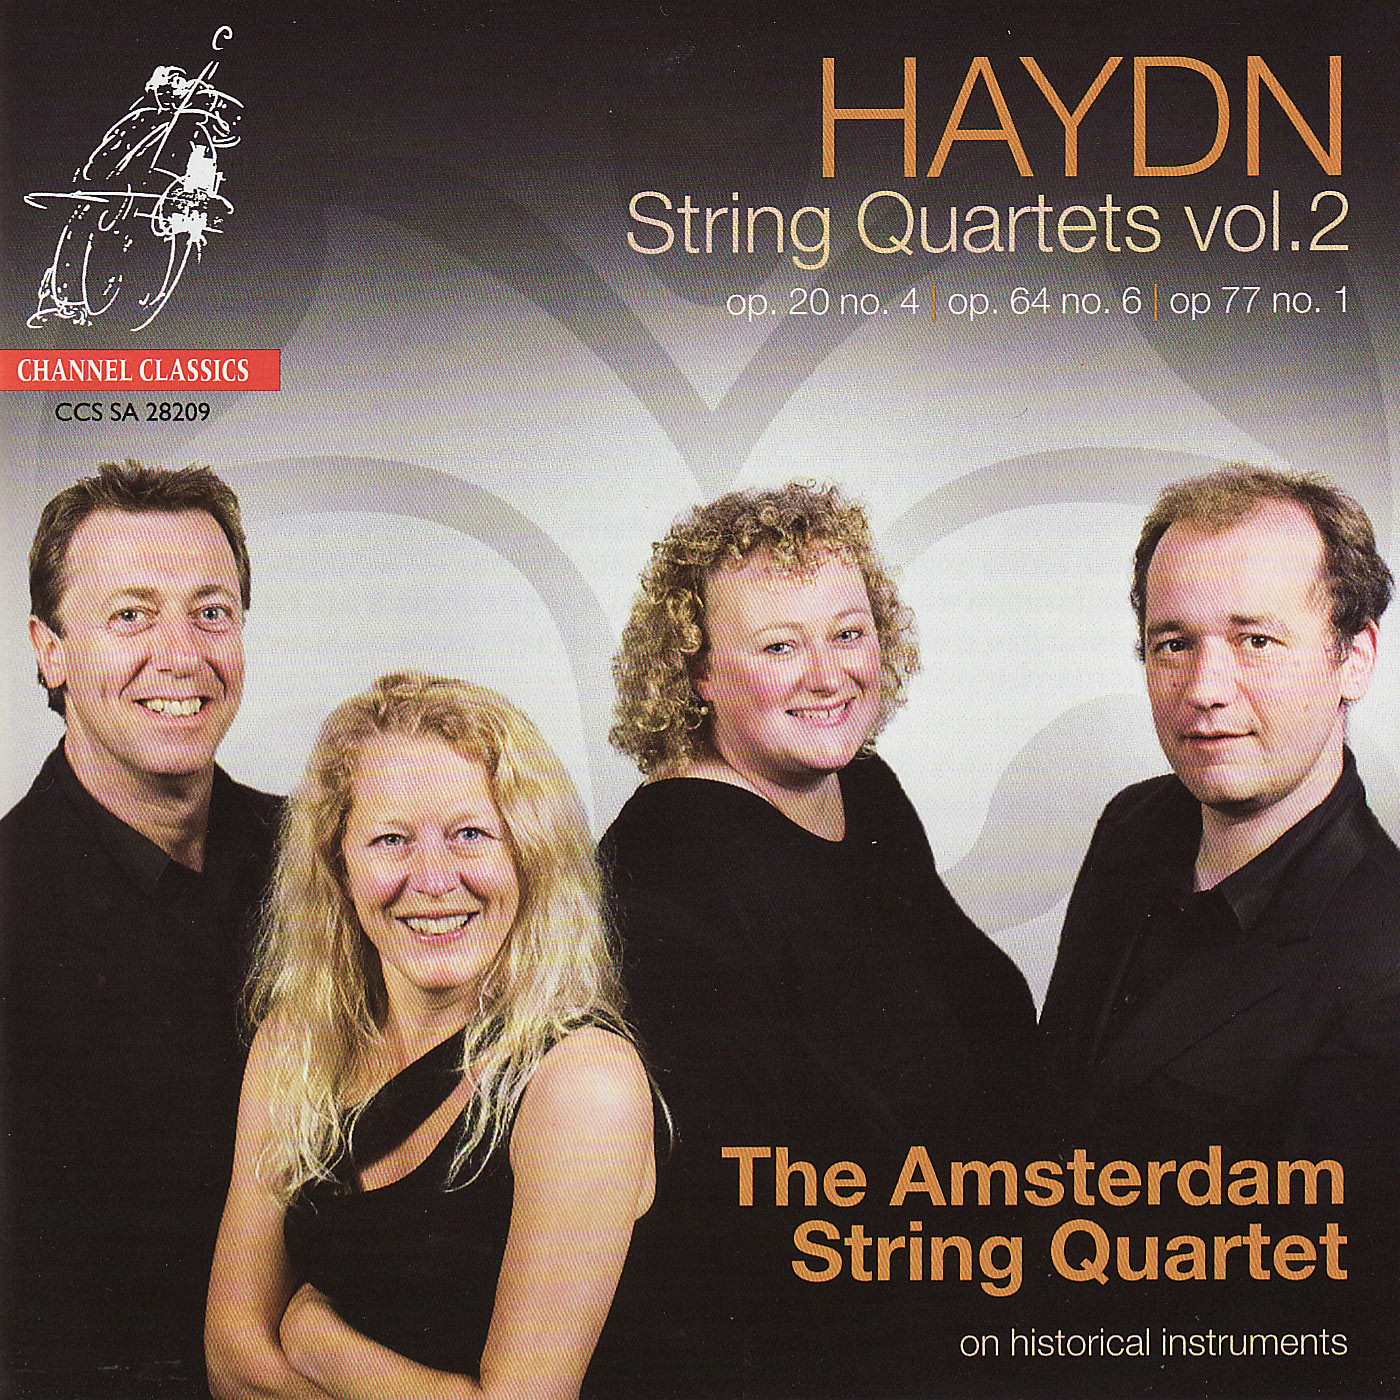 The Amsterdam String Quartet – Haydn String Quartets Vol. 2